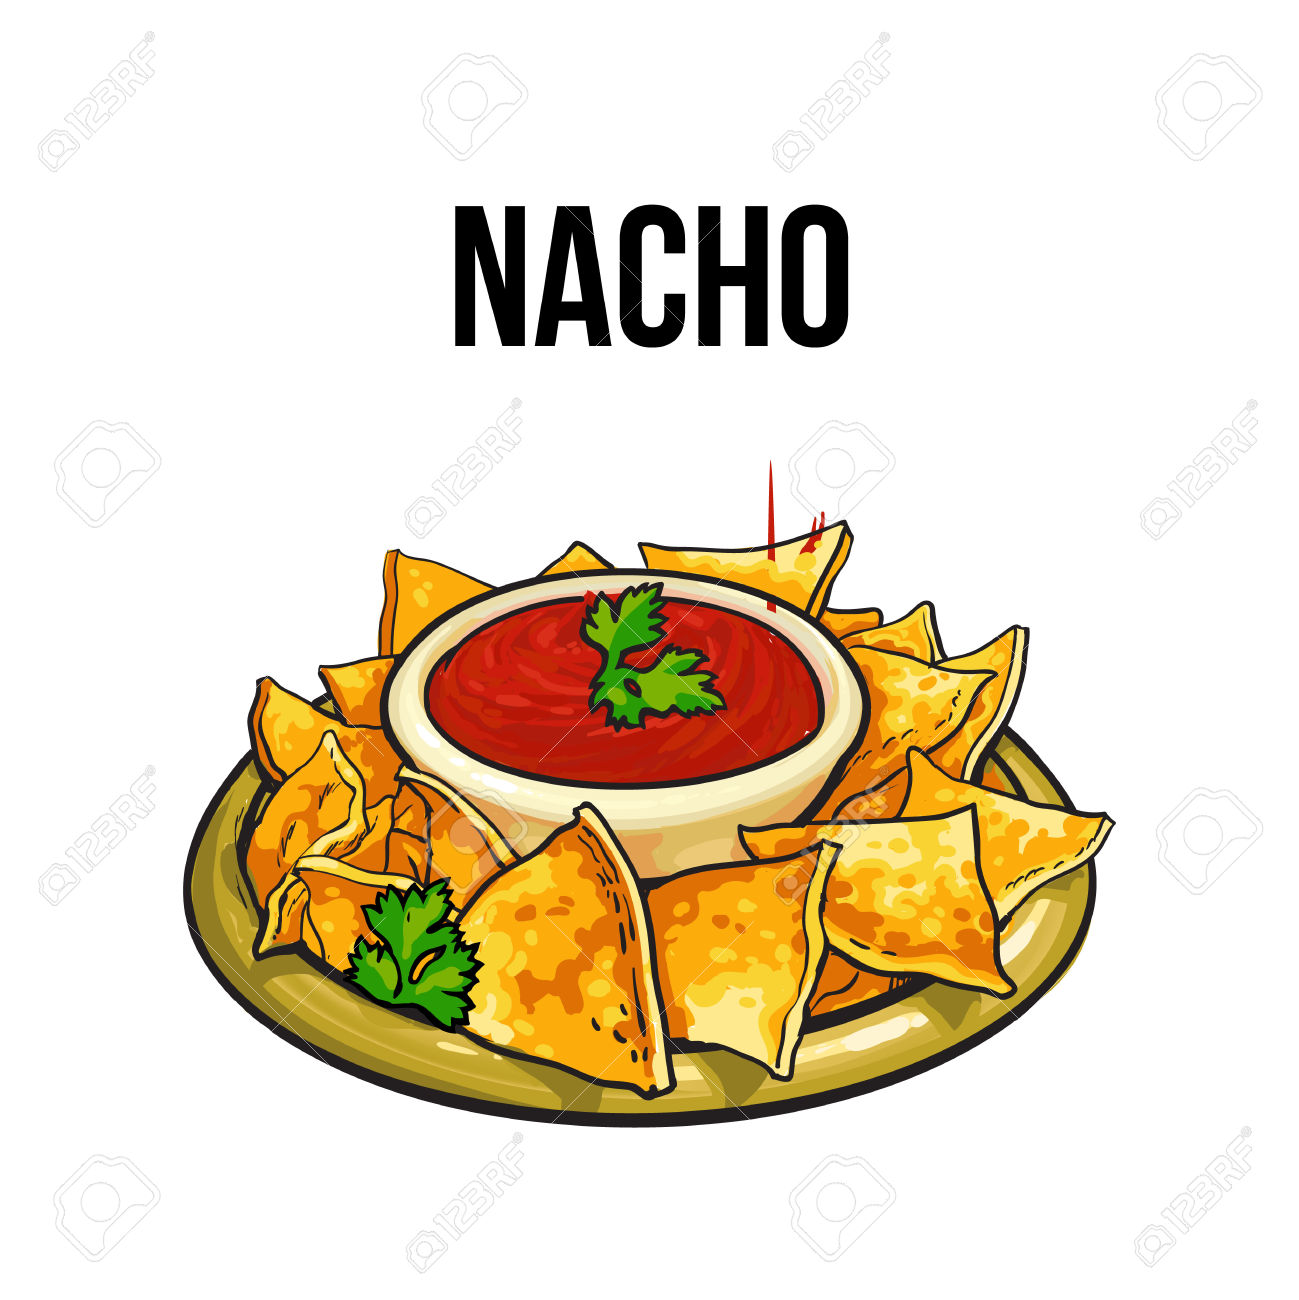 nacho clipart hispanic food